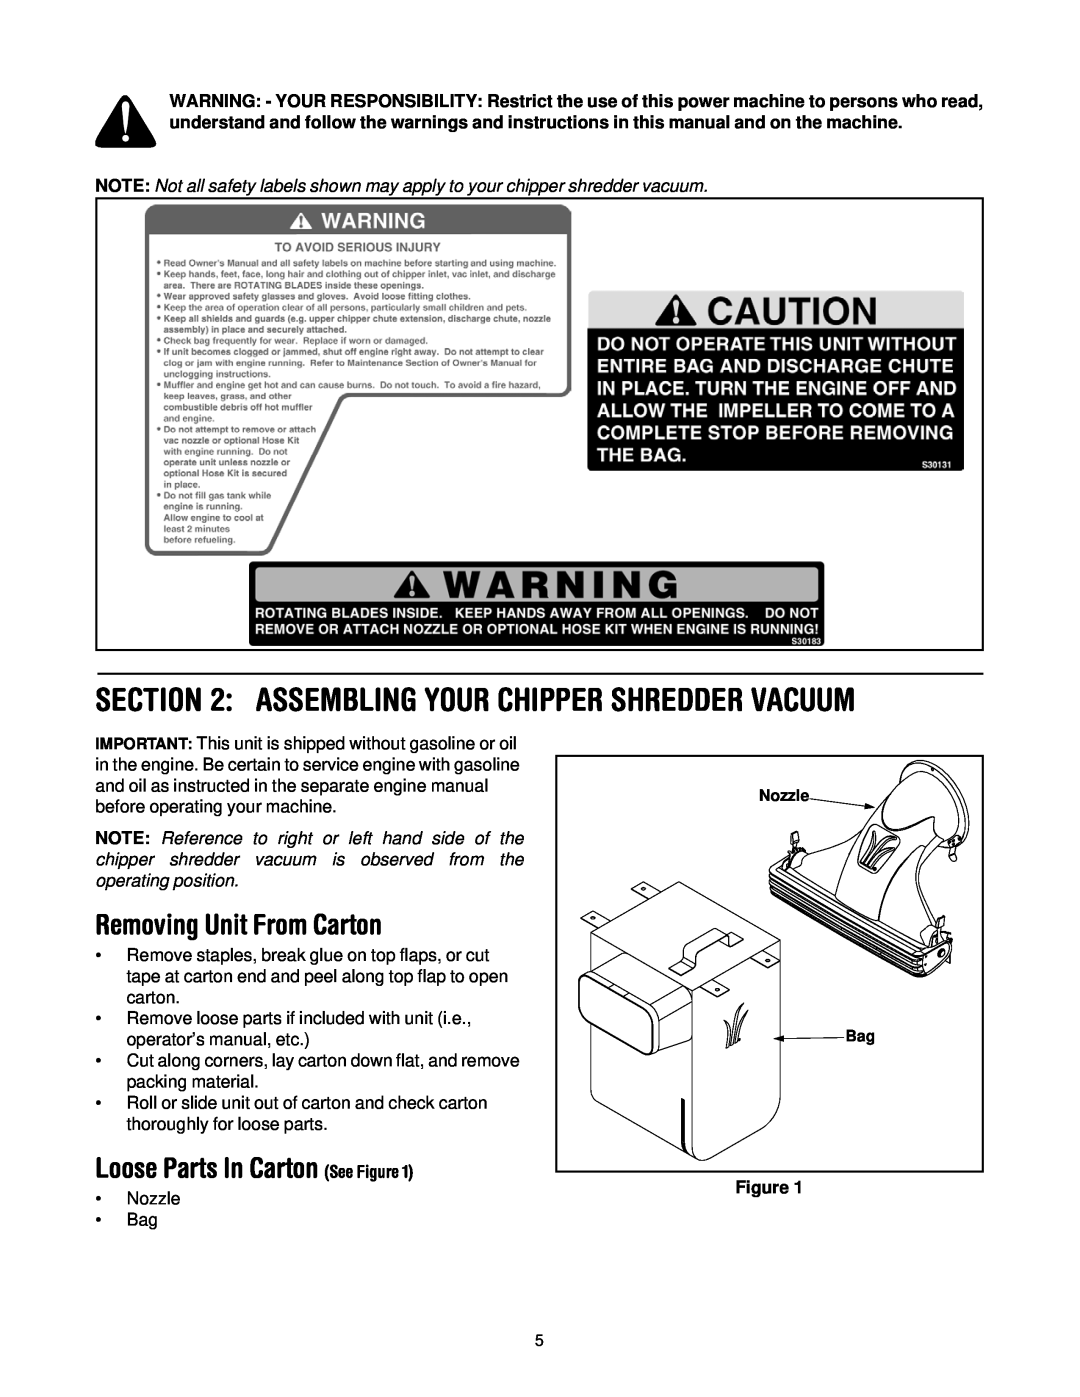 Yard-Man 203 manual Removing Unit From Carton, Loose Parts In Carton See Figure 